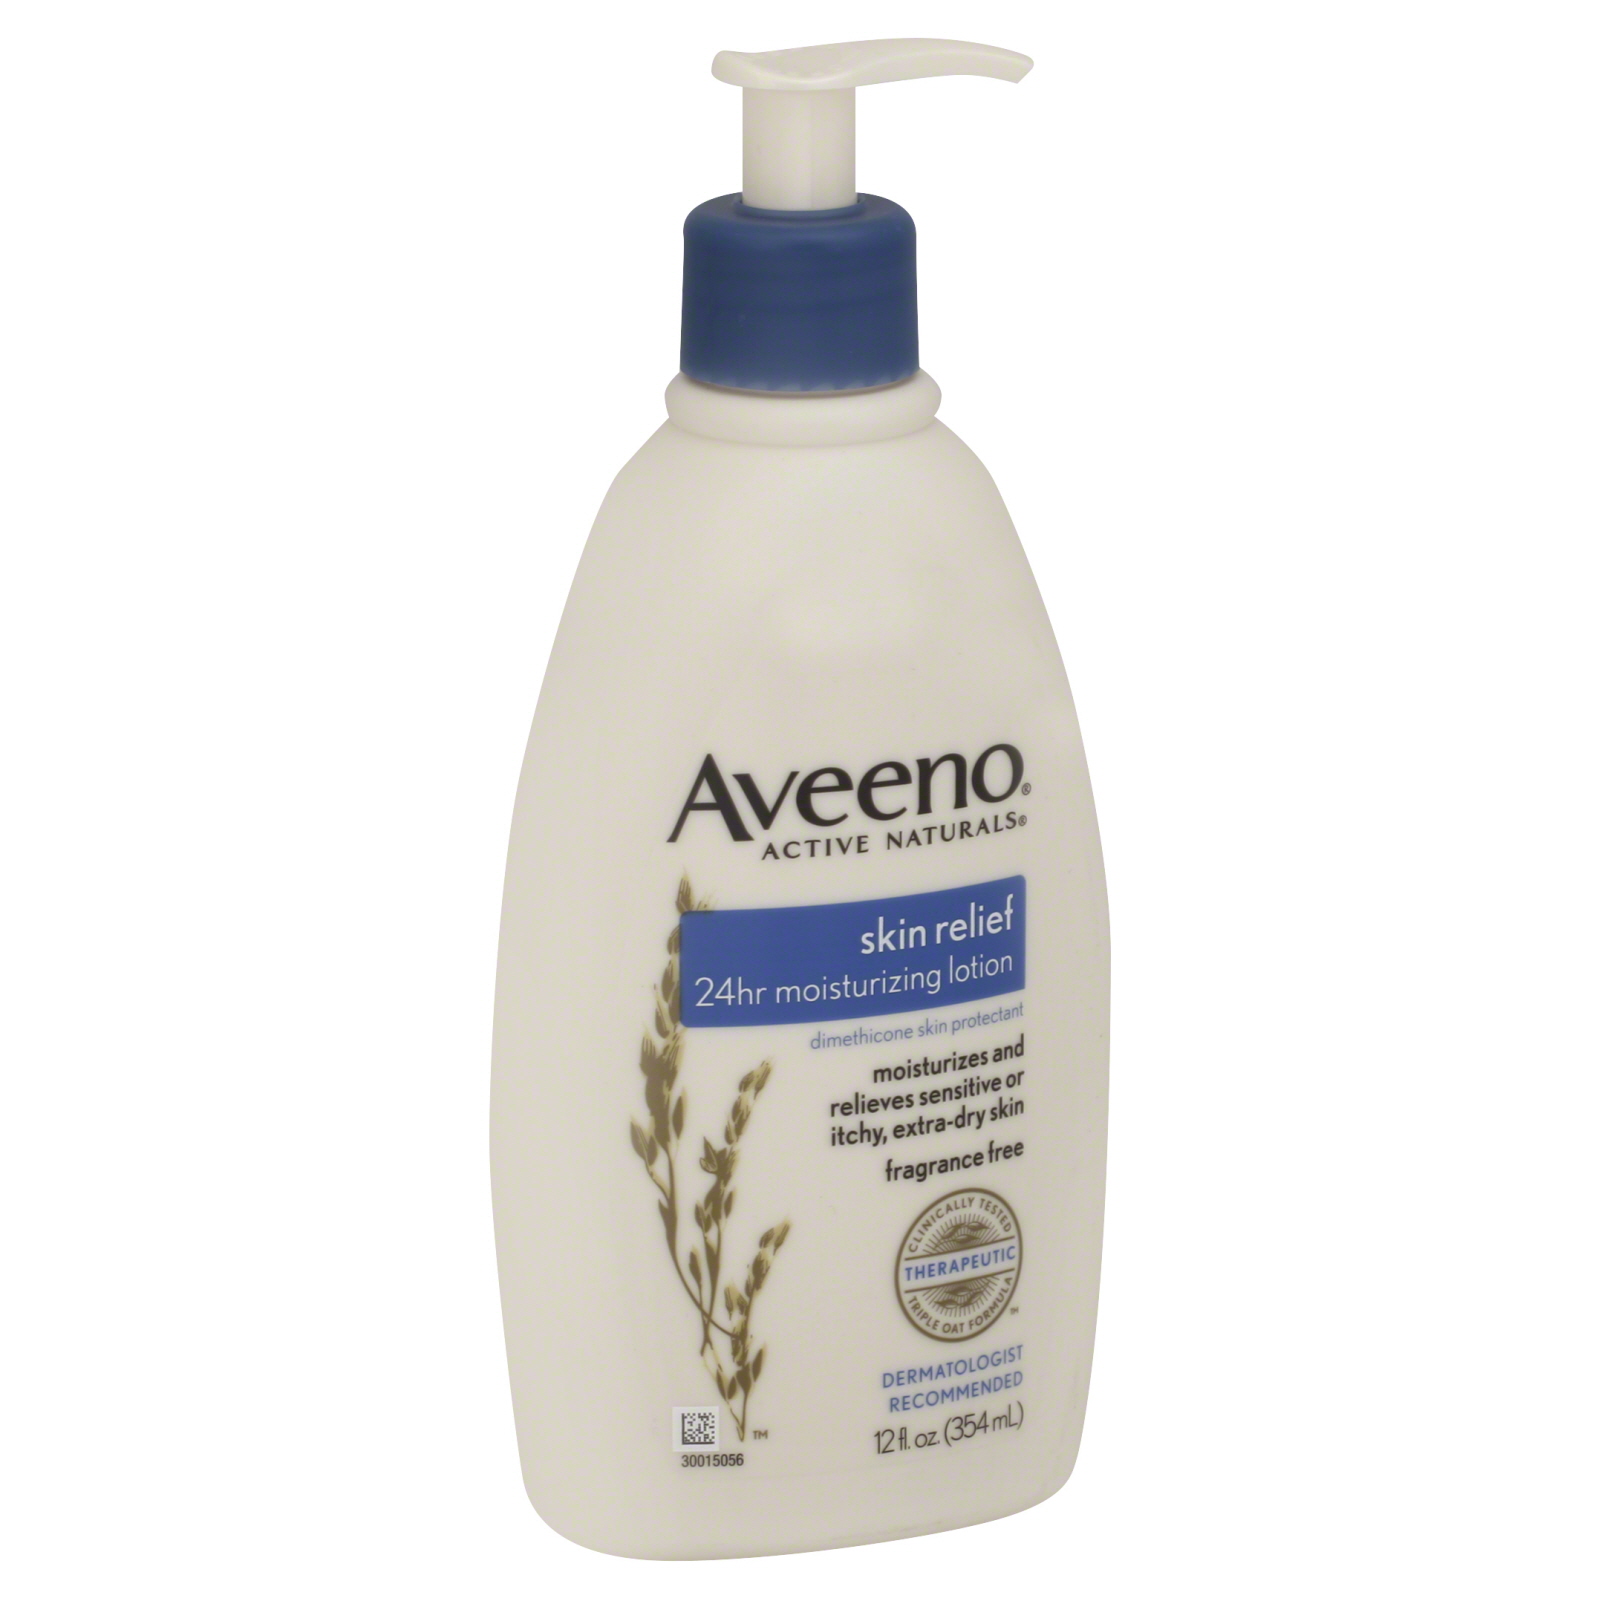 Aveeno Active Naturals Moisturizing Lotion, Skin Relief, 12 fl oz (354 ml)